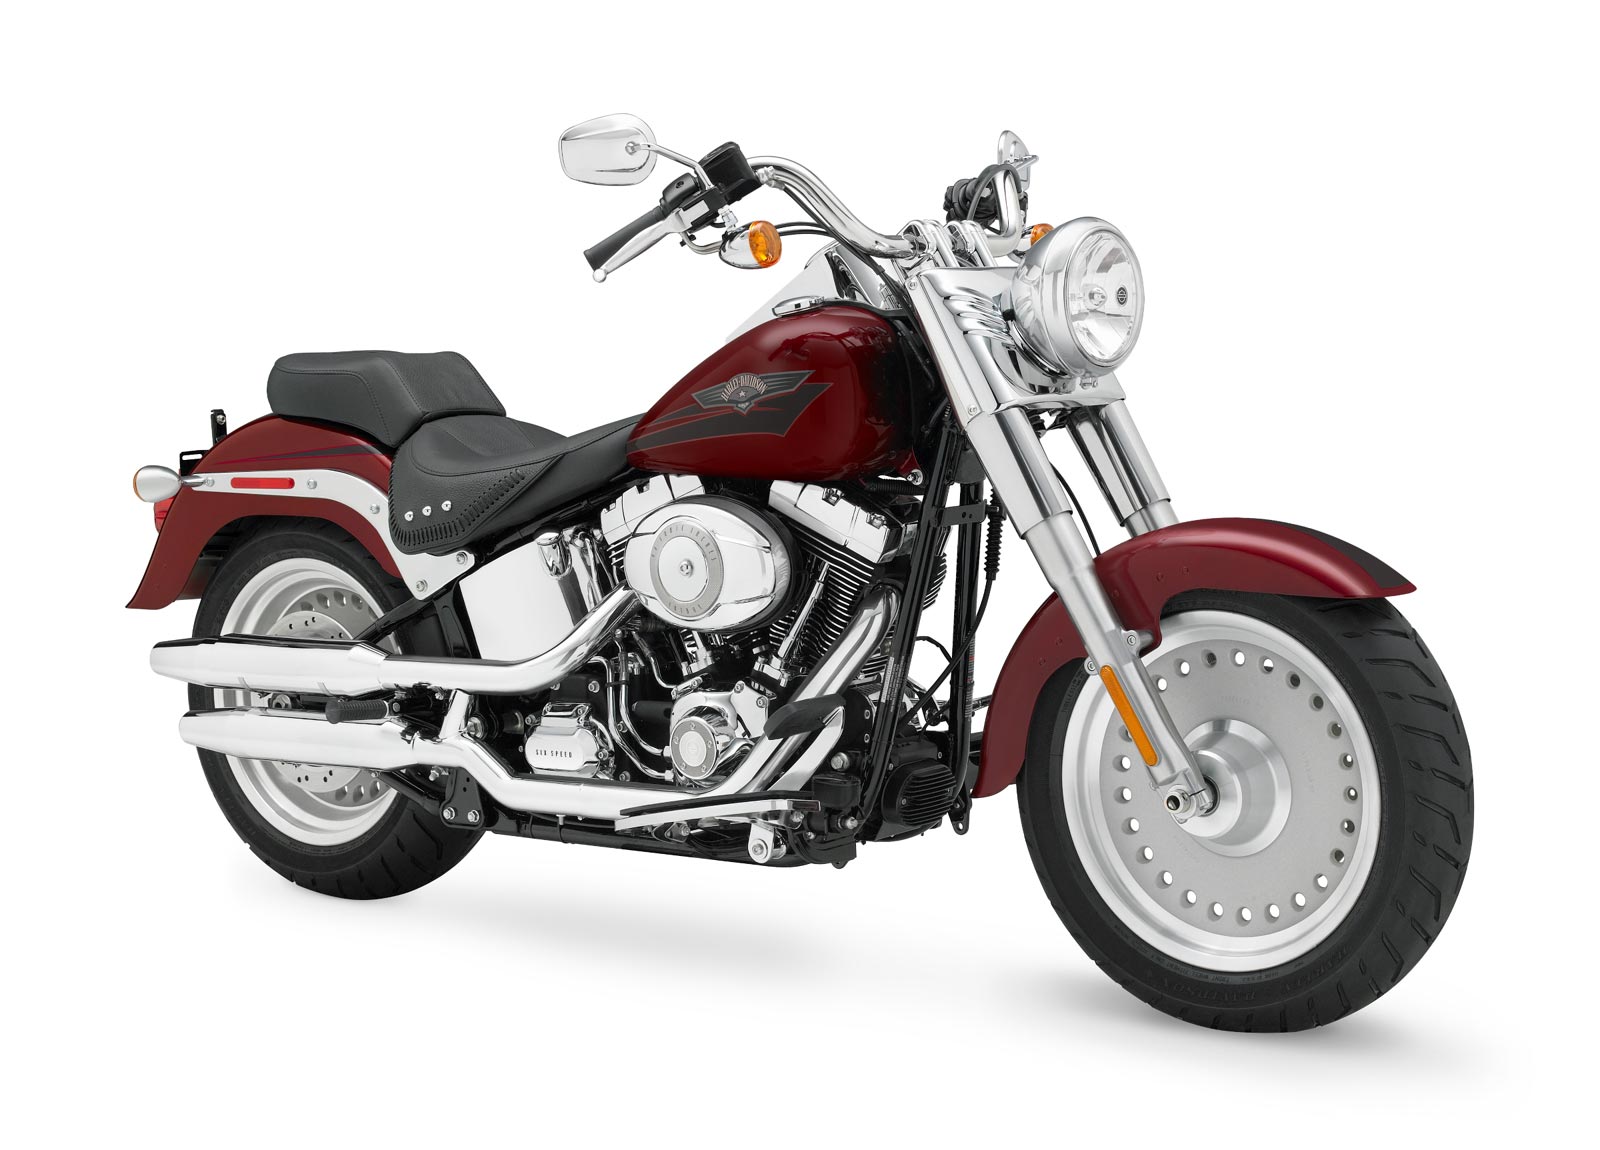 Harley Davidson Fat Boy 2009 1600x1150 Wallpaper Teahub Io